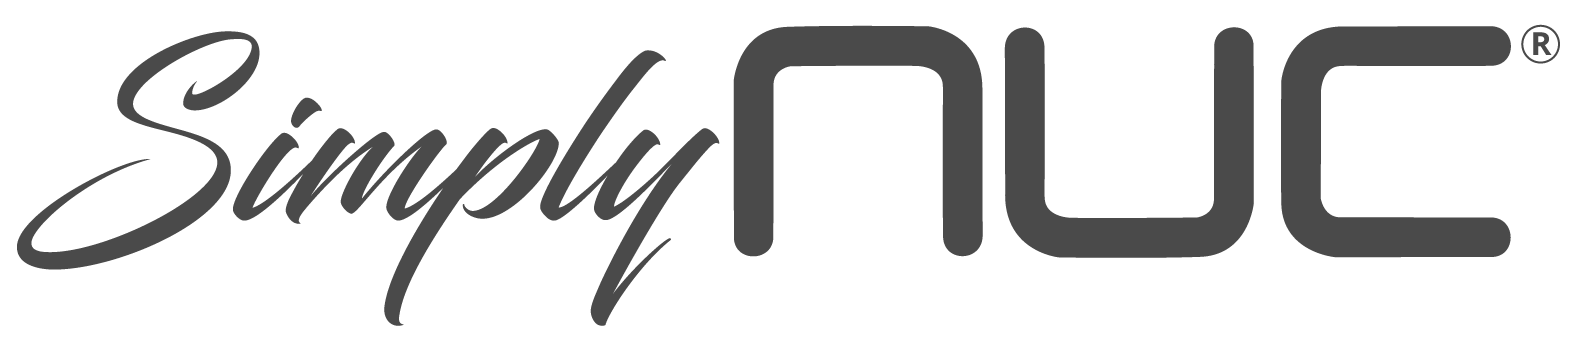 Simply NUC grey logo